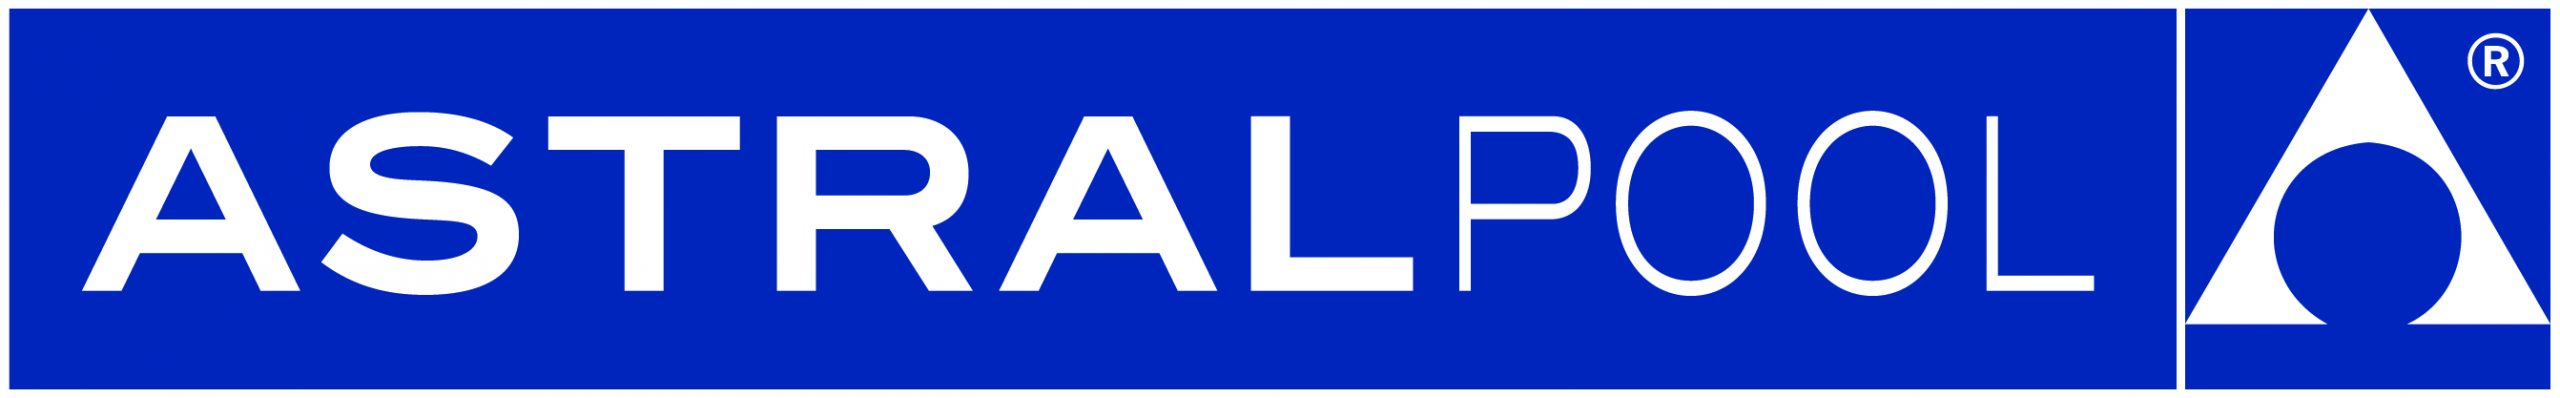 logo-astralpool